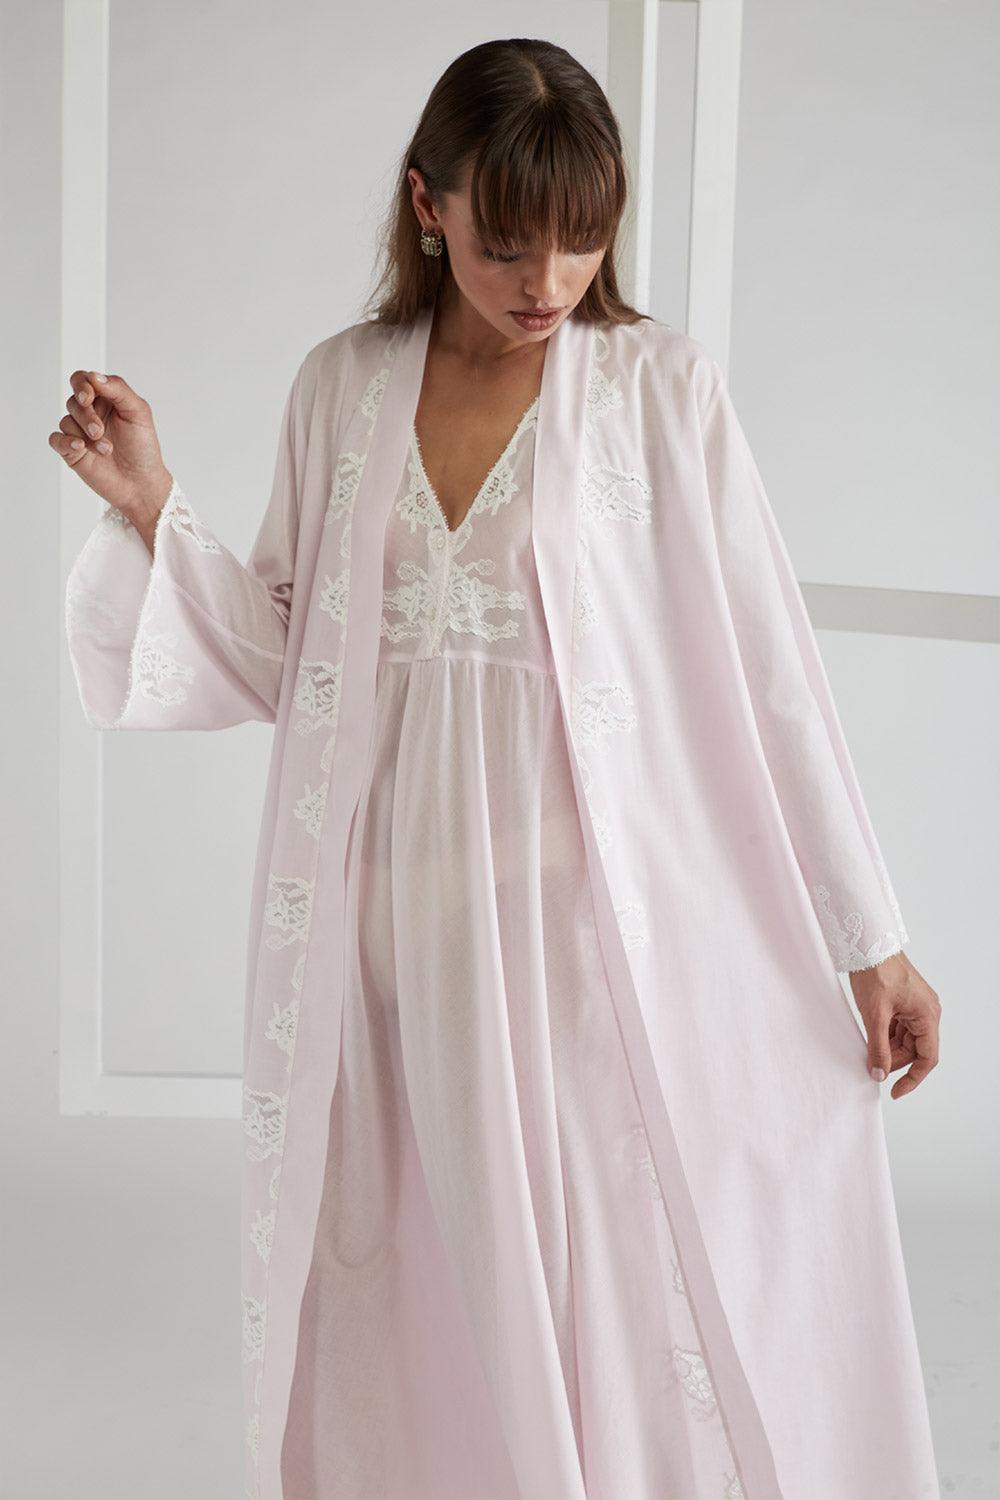 Cotton Vual Robe &amp; Cotton Vual Nightie Light Pink - Bloom (Ecru) - Bocan